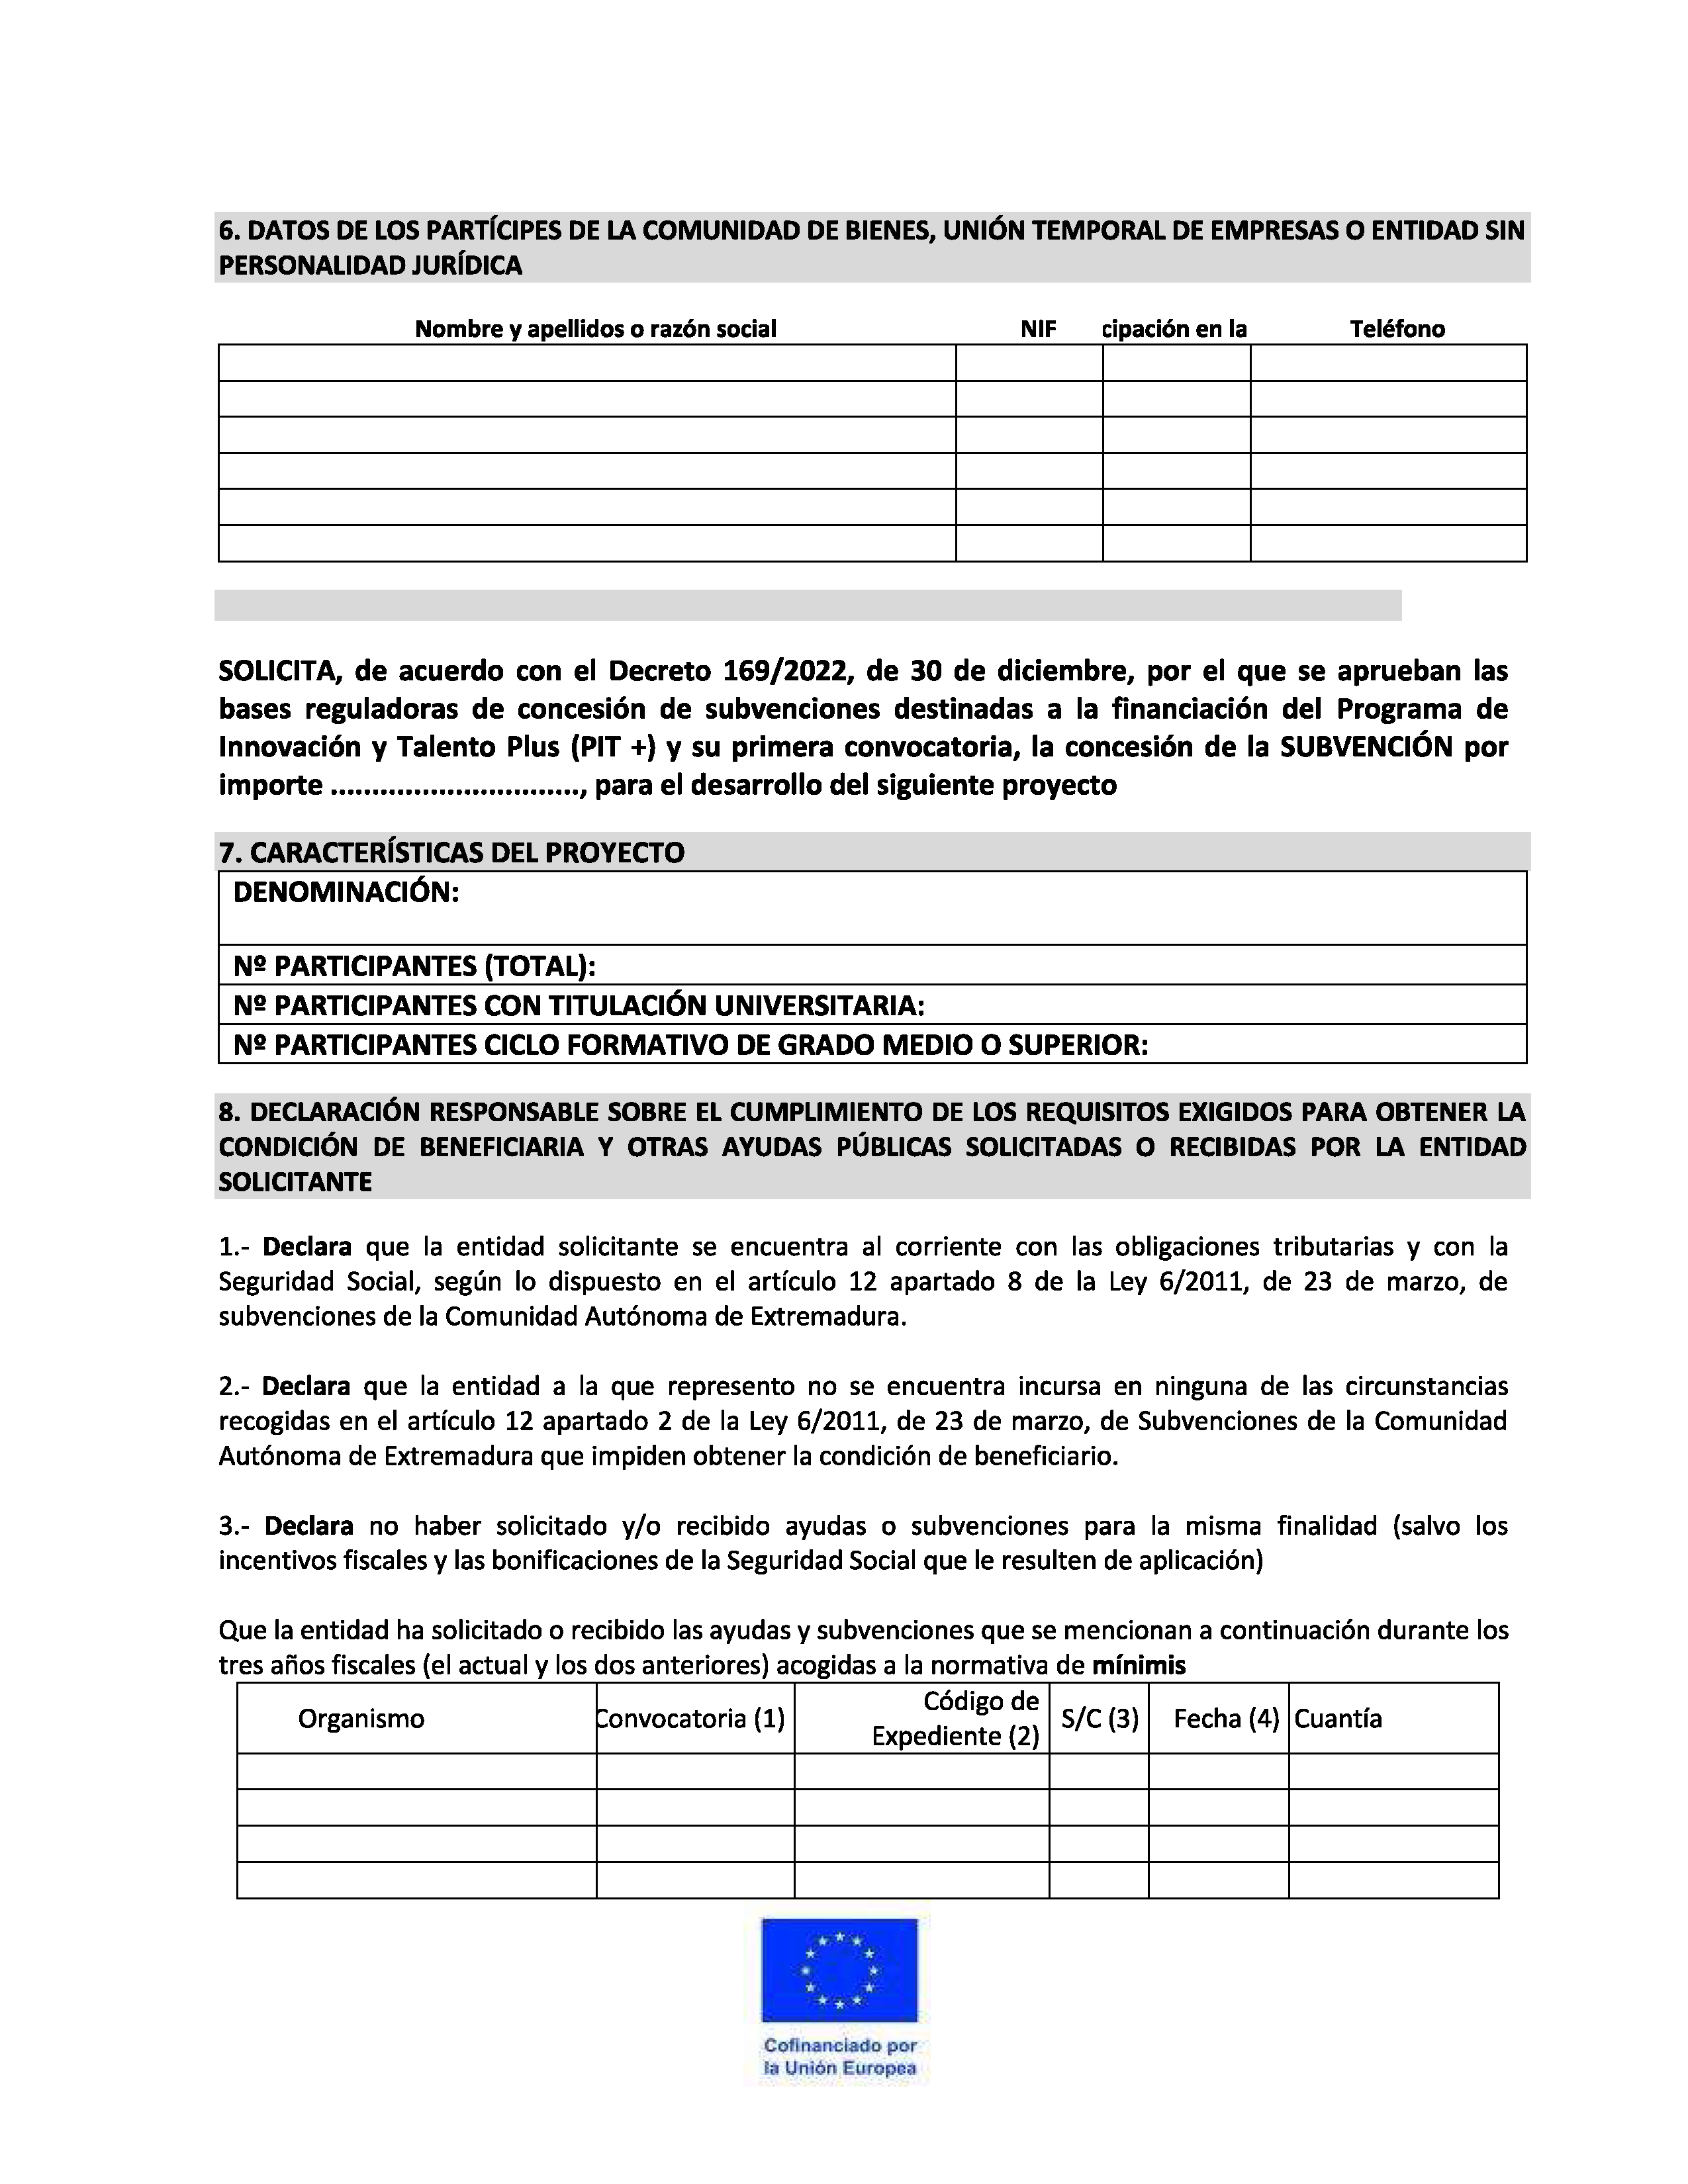 ANEXO I - SOLICITUD APROBACION DE PROYECTOS Pag 2